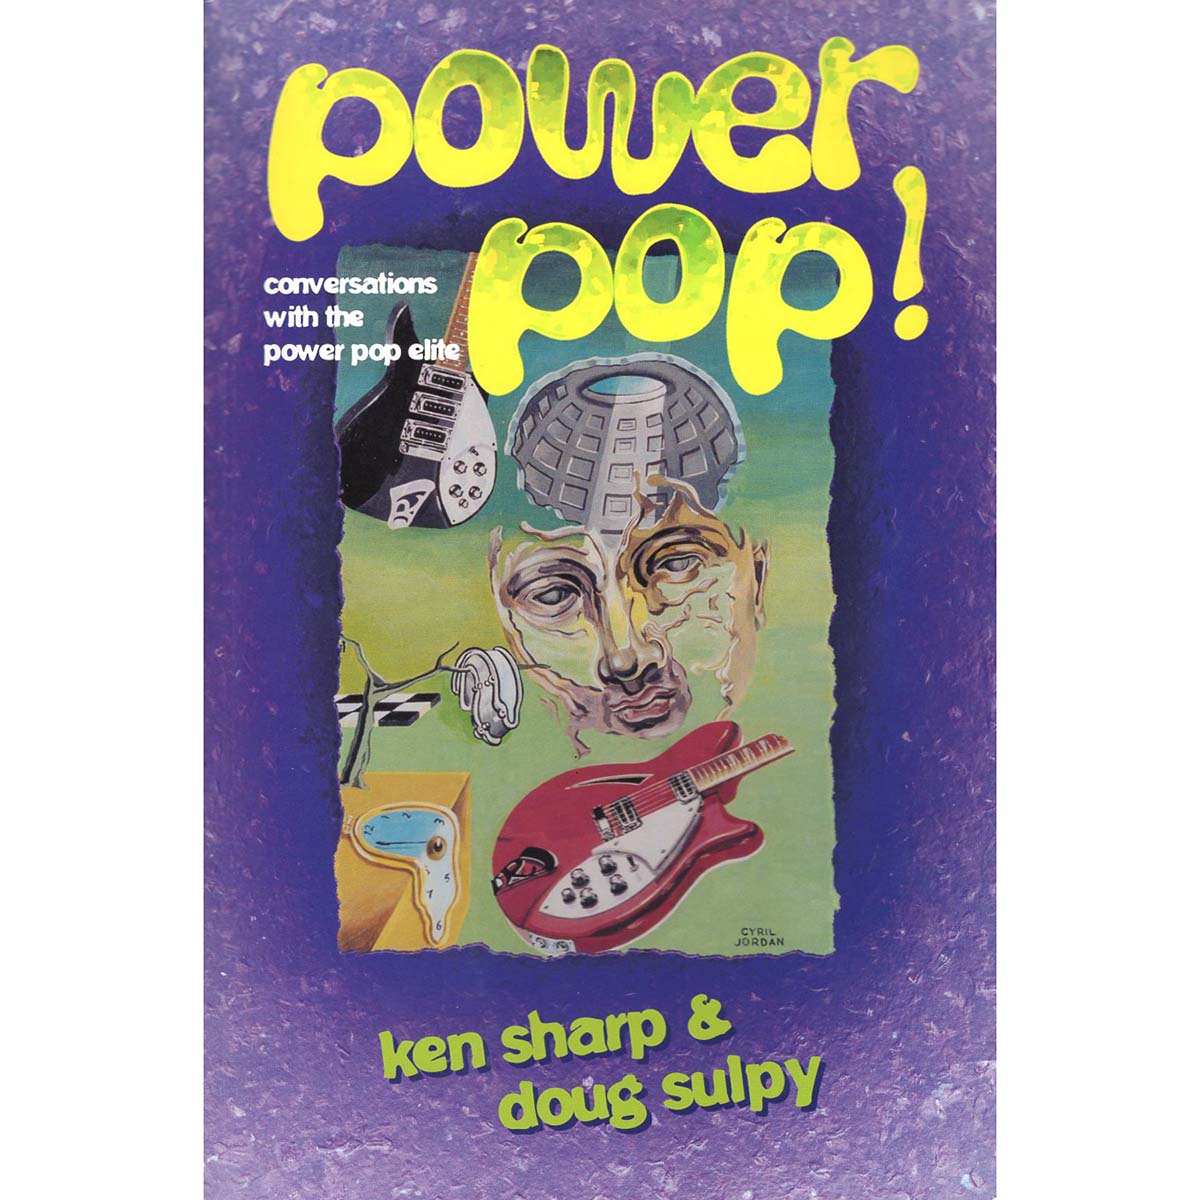 Power Pop: Conversations With the Power Pop Elite (Ken Sharp, Doug Sulpy)